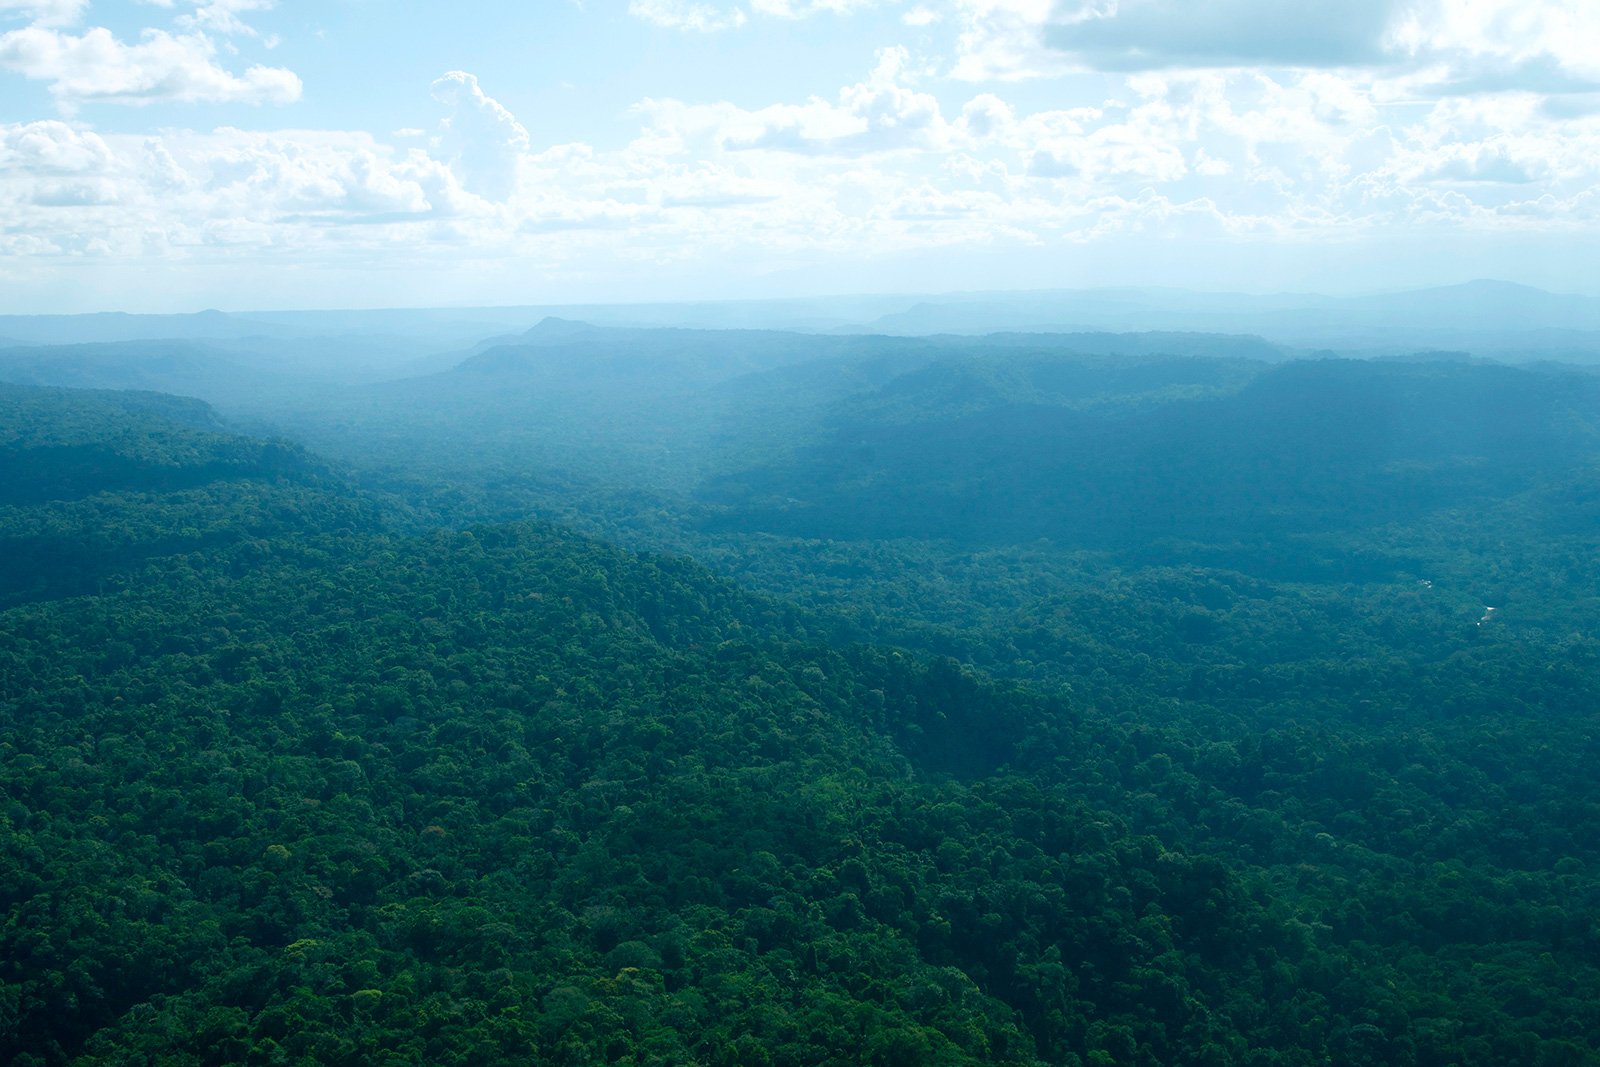 Waorani ancestral territory in the Pastaza region of Ecuadorian Amazon.